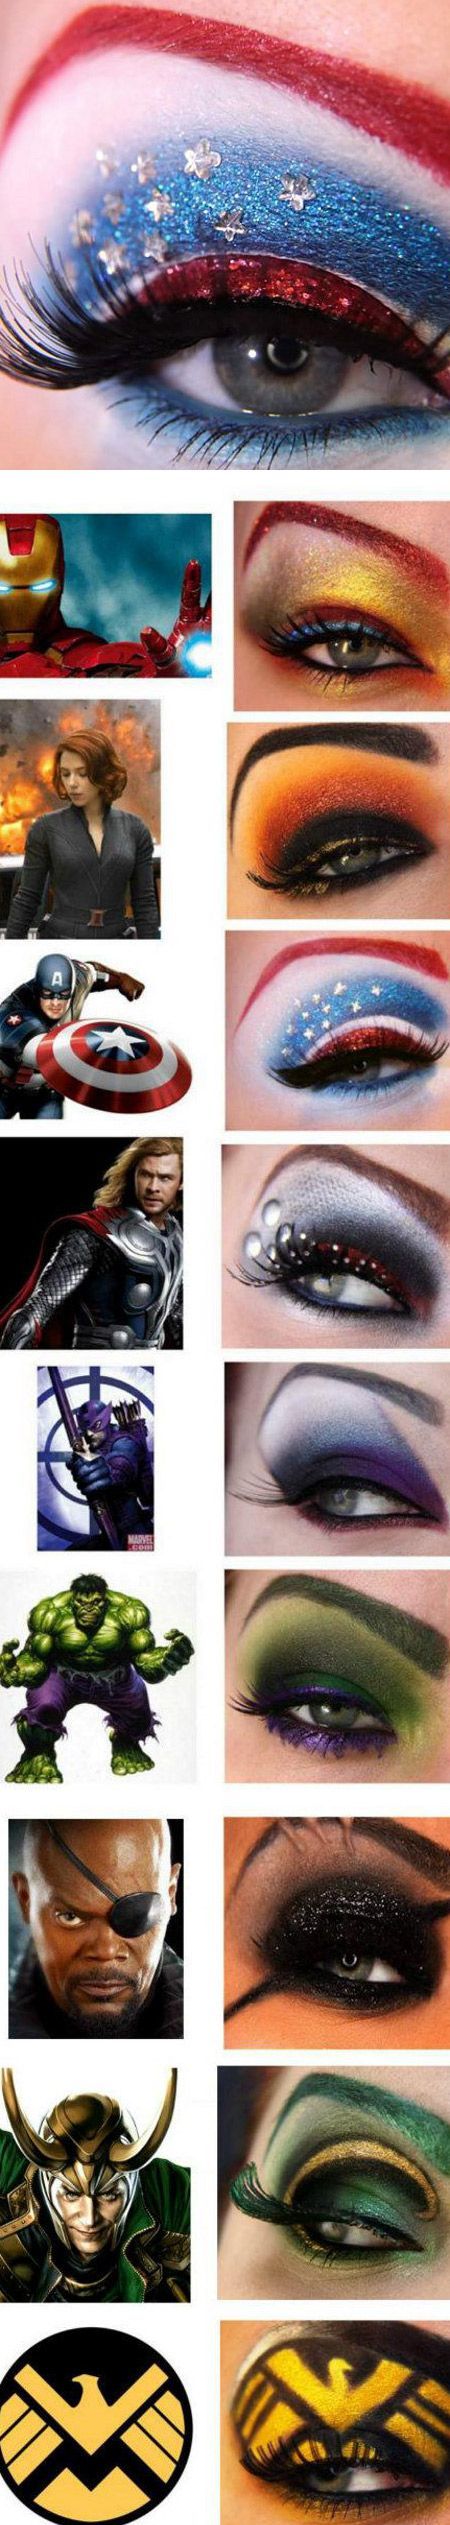 Avengers makeup. Im definitely trying them all